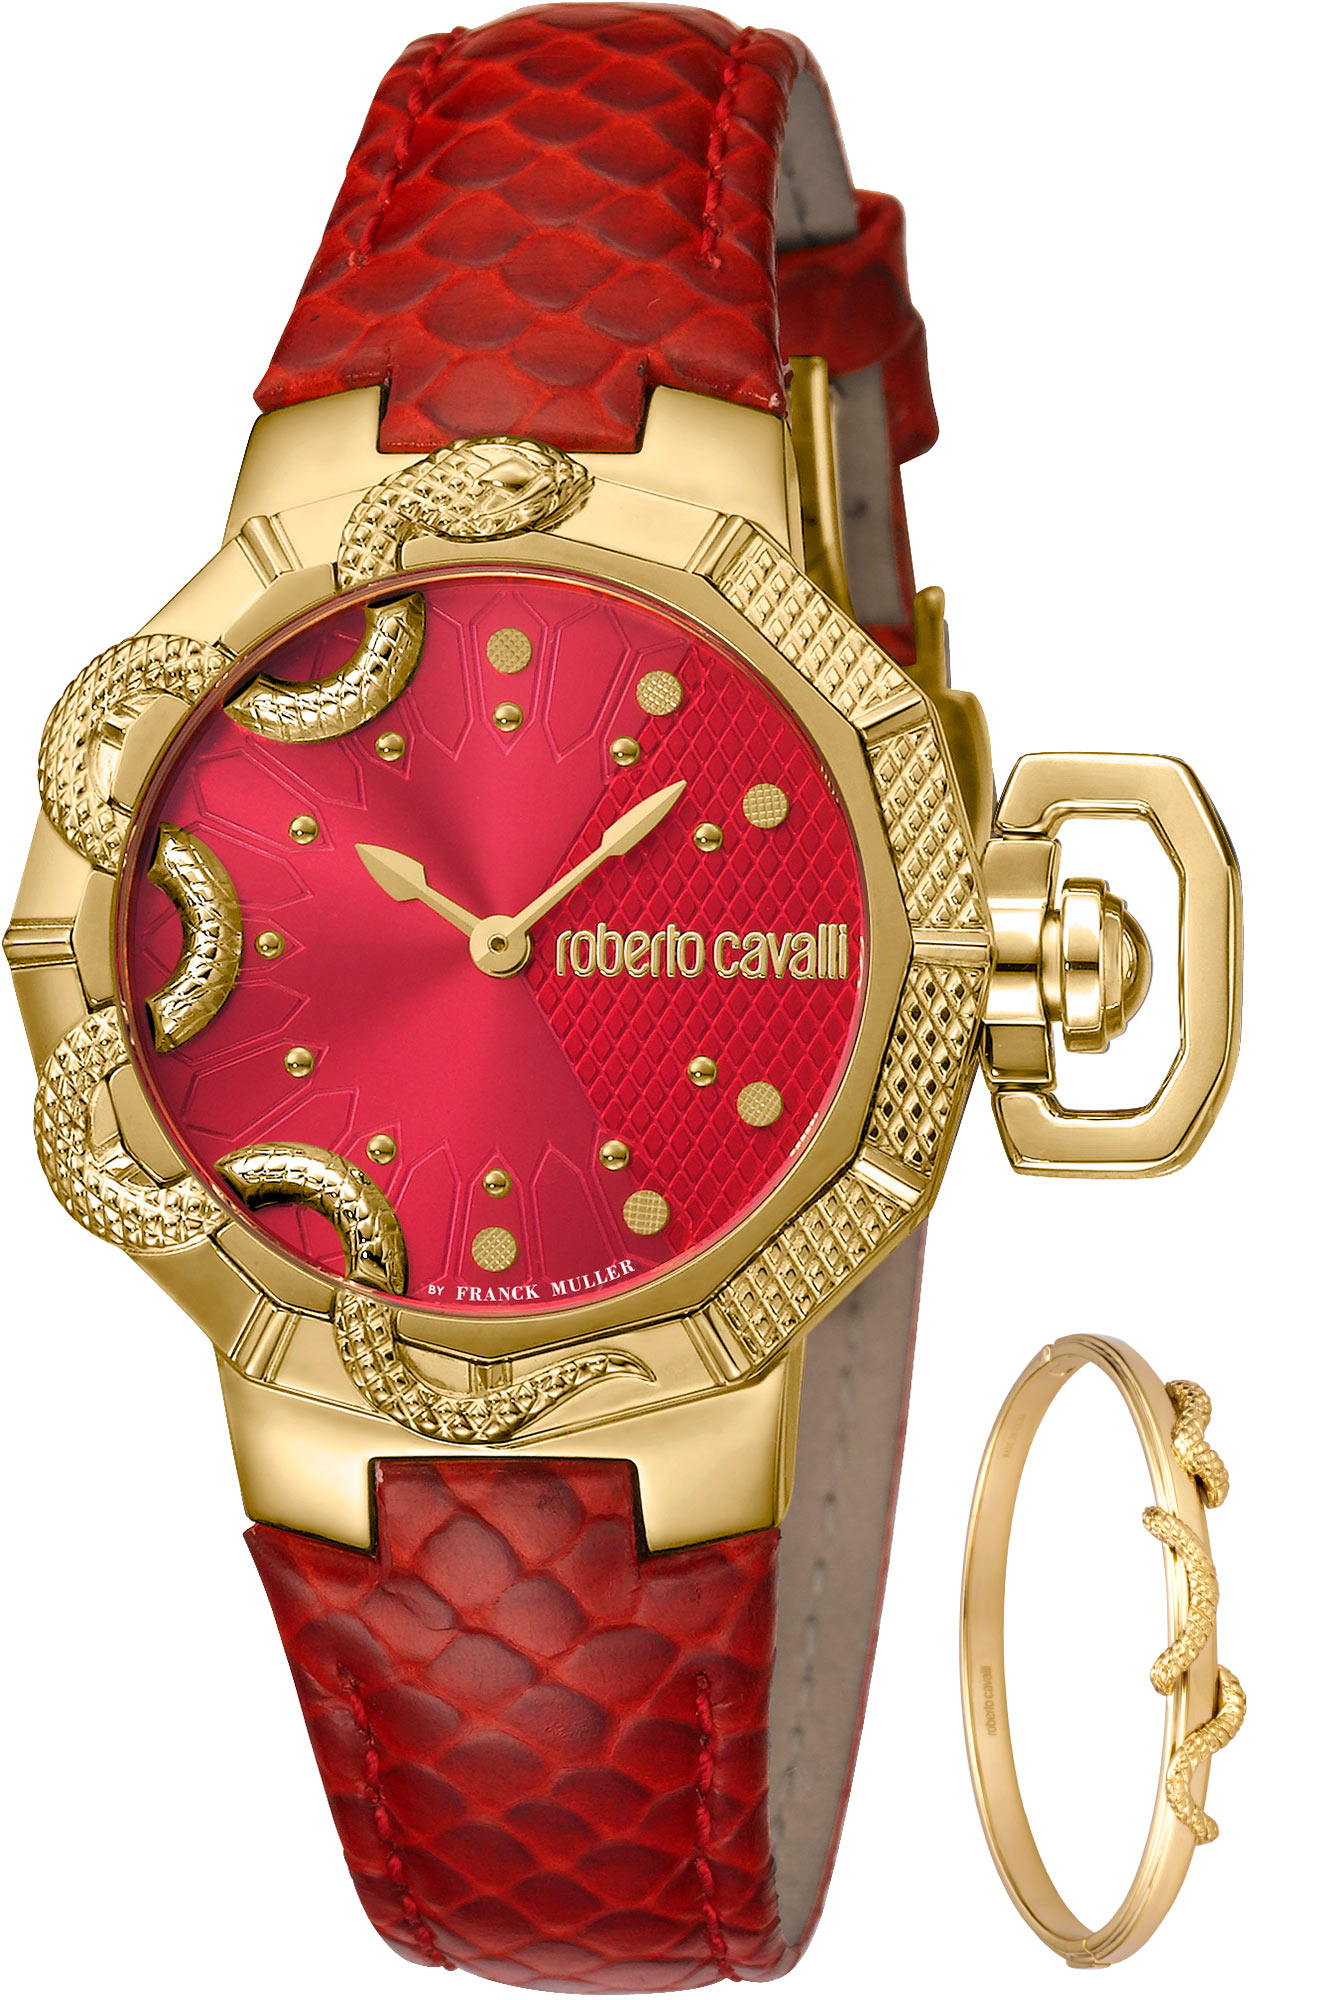 Reloj Roberto Cavalli by Franck Muller rv1l069l0031